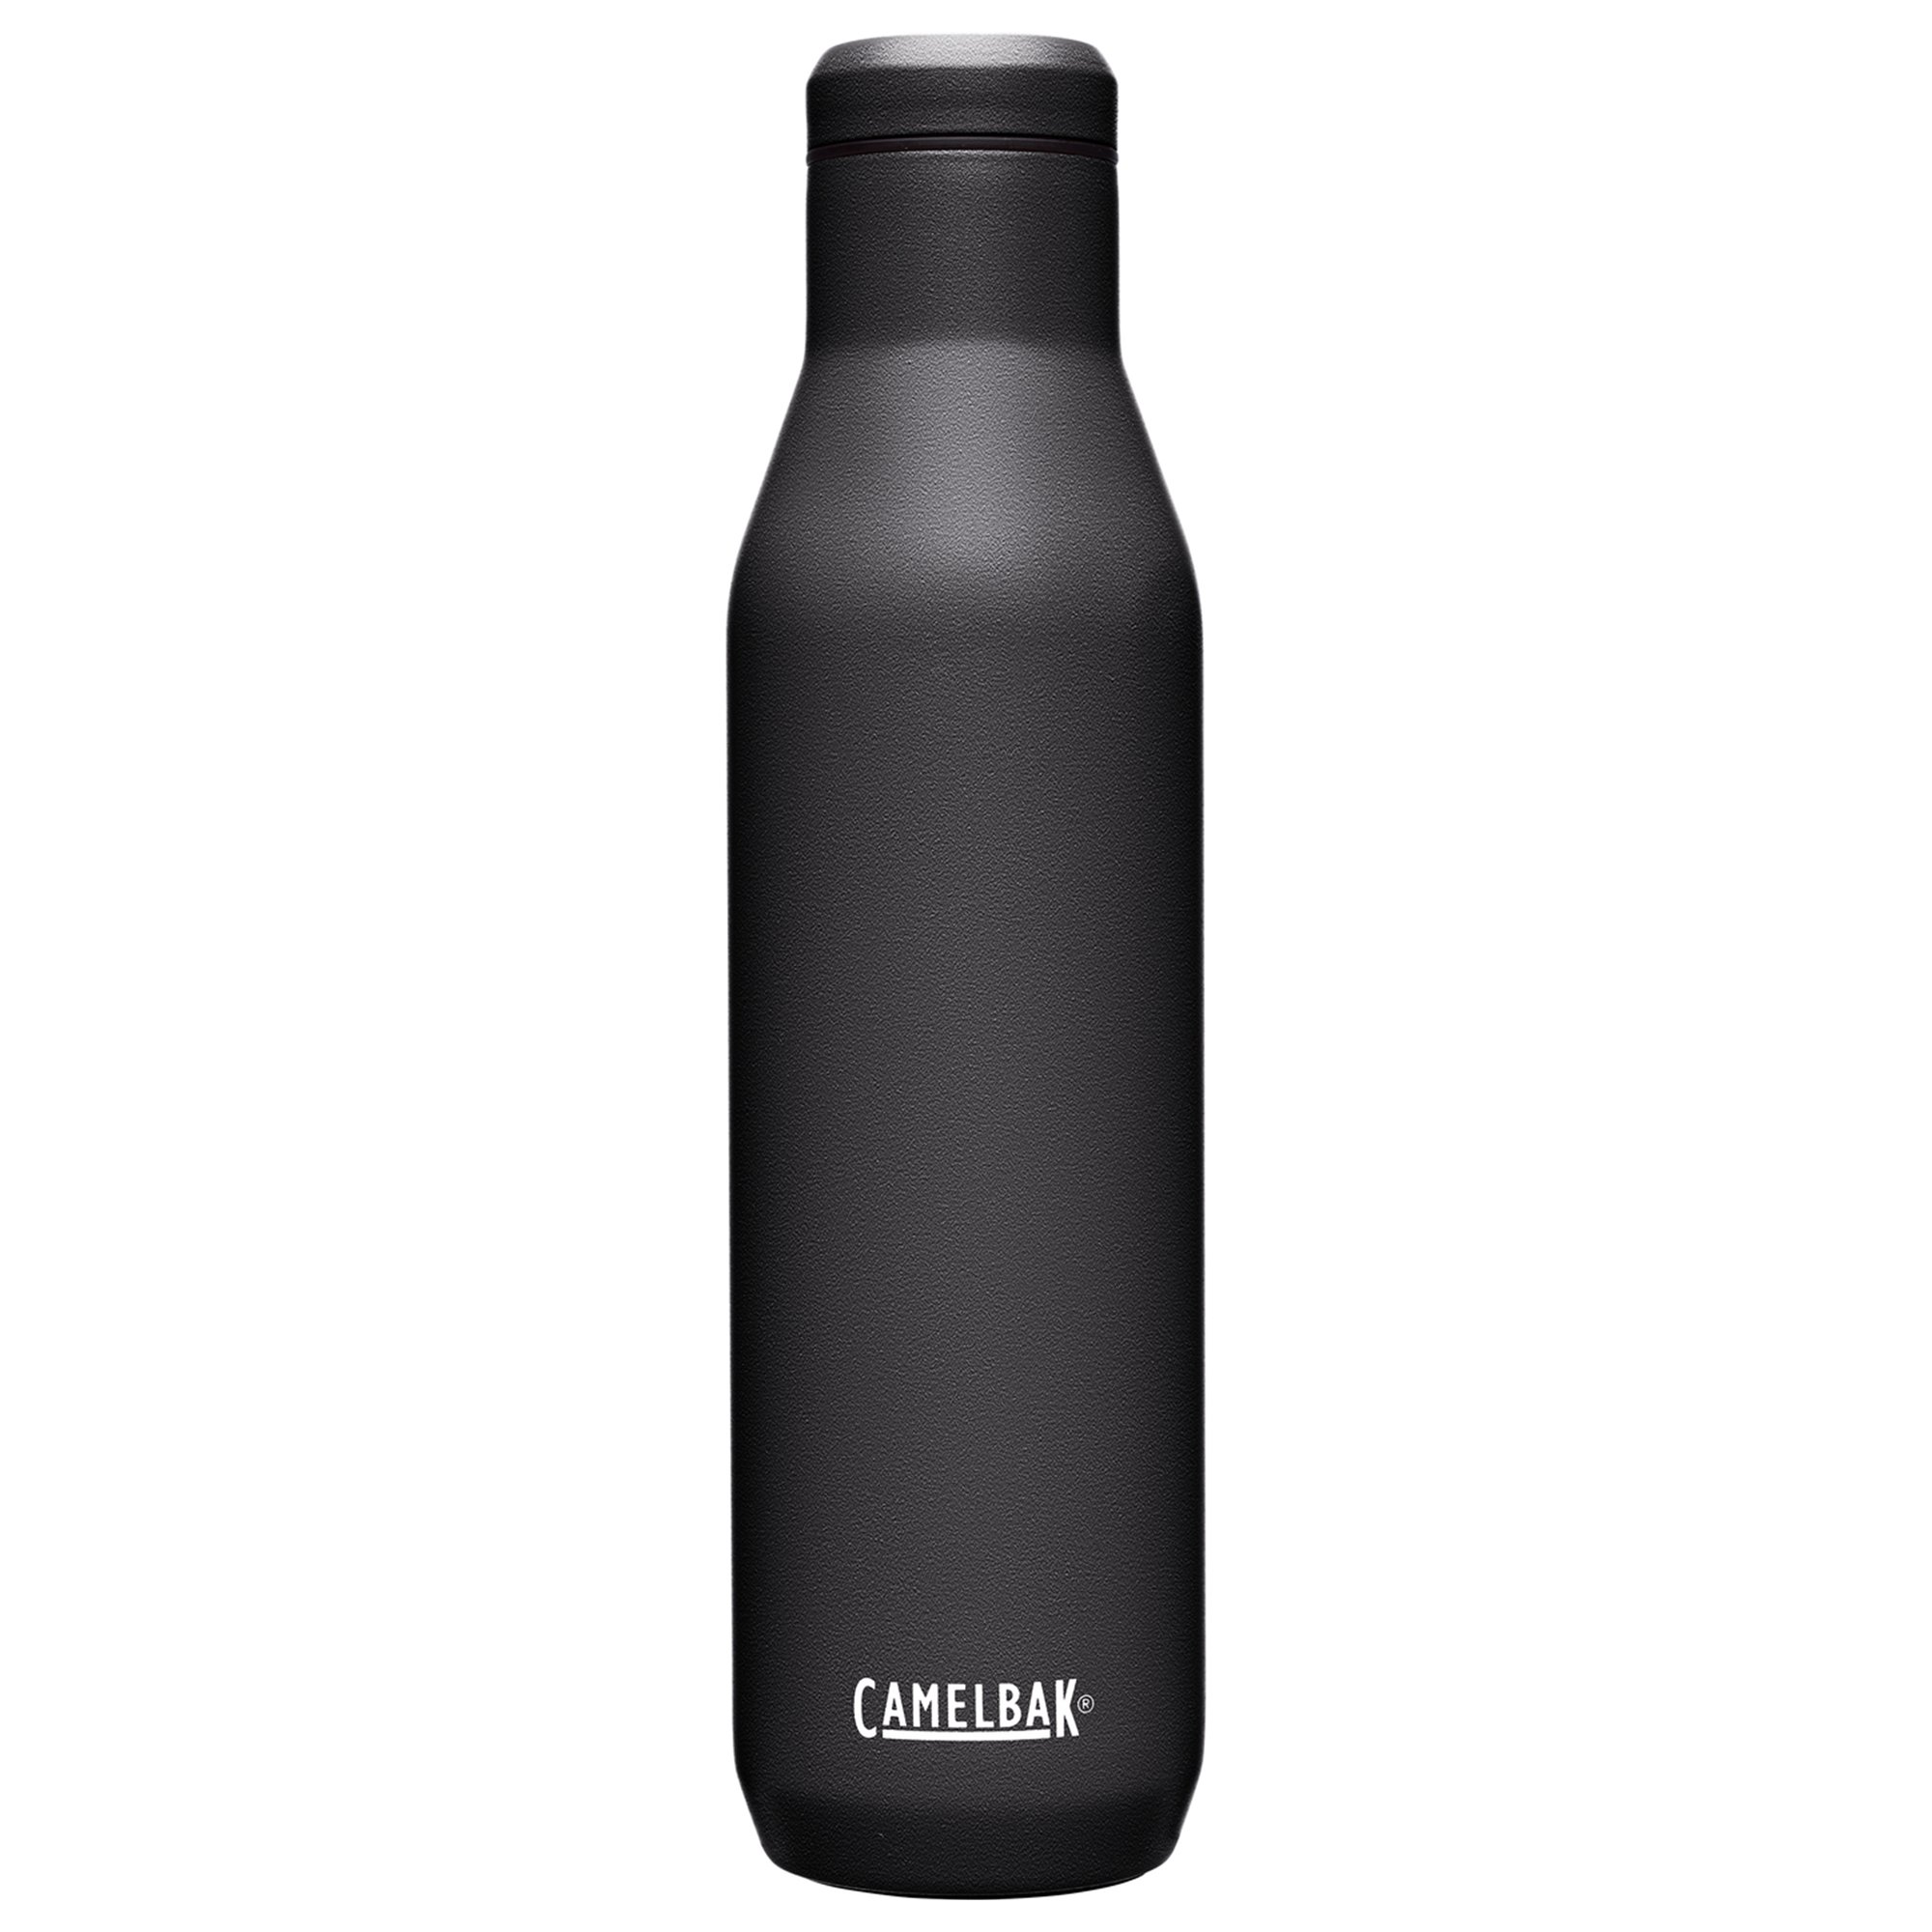 Camelbak Drikkeflaske 0.75 liter black